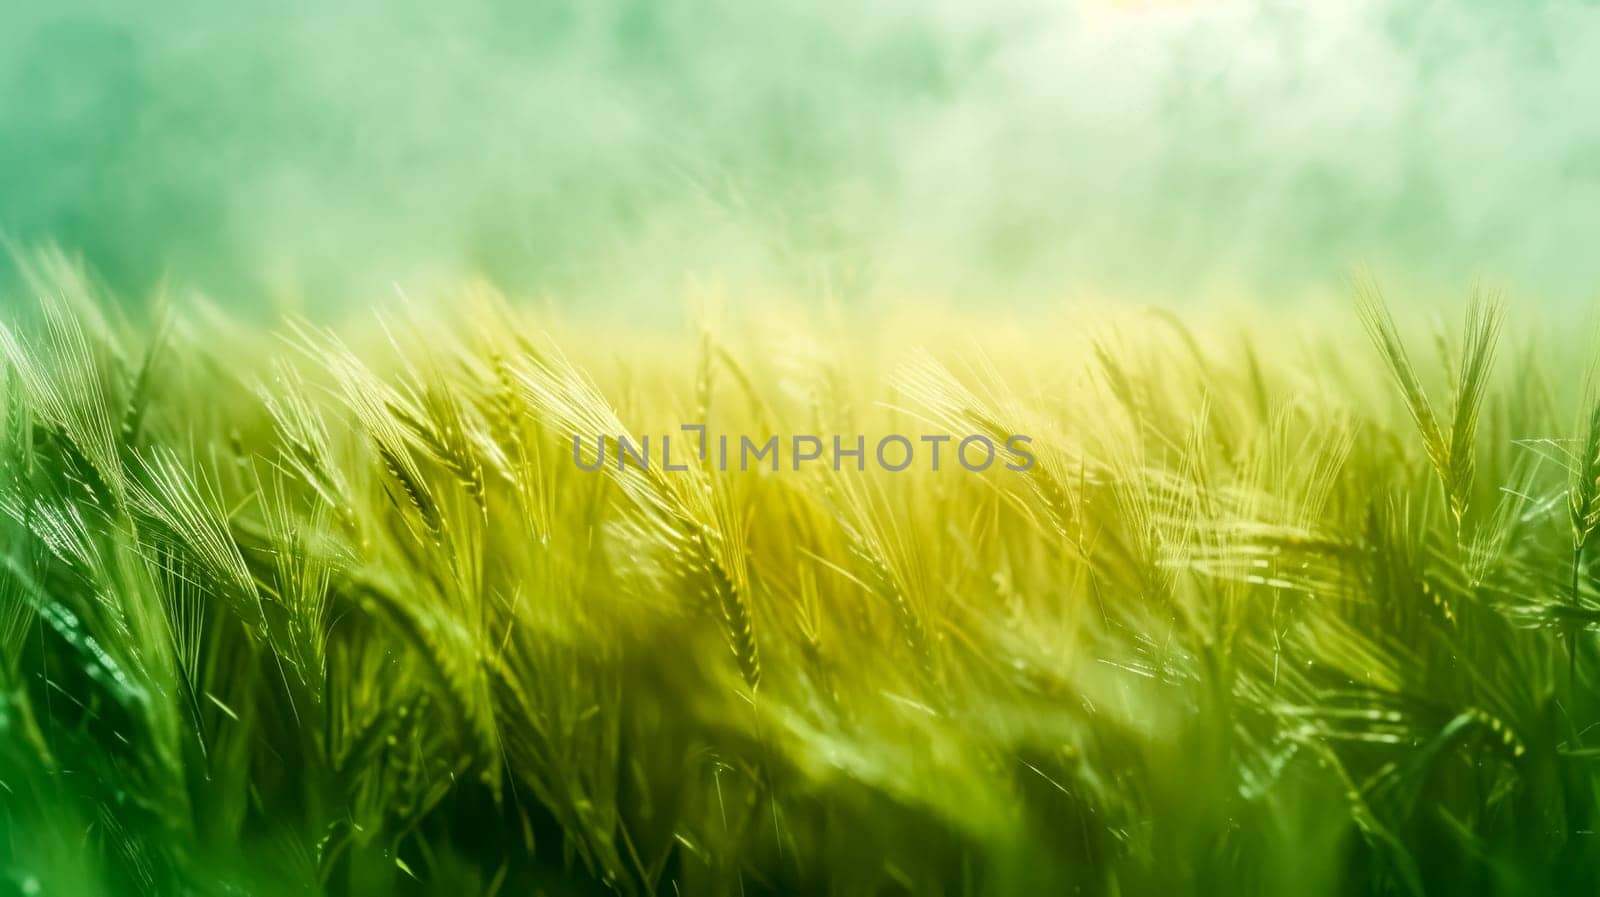 Golden wheat field at sunrise by Edophoto